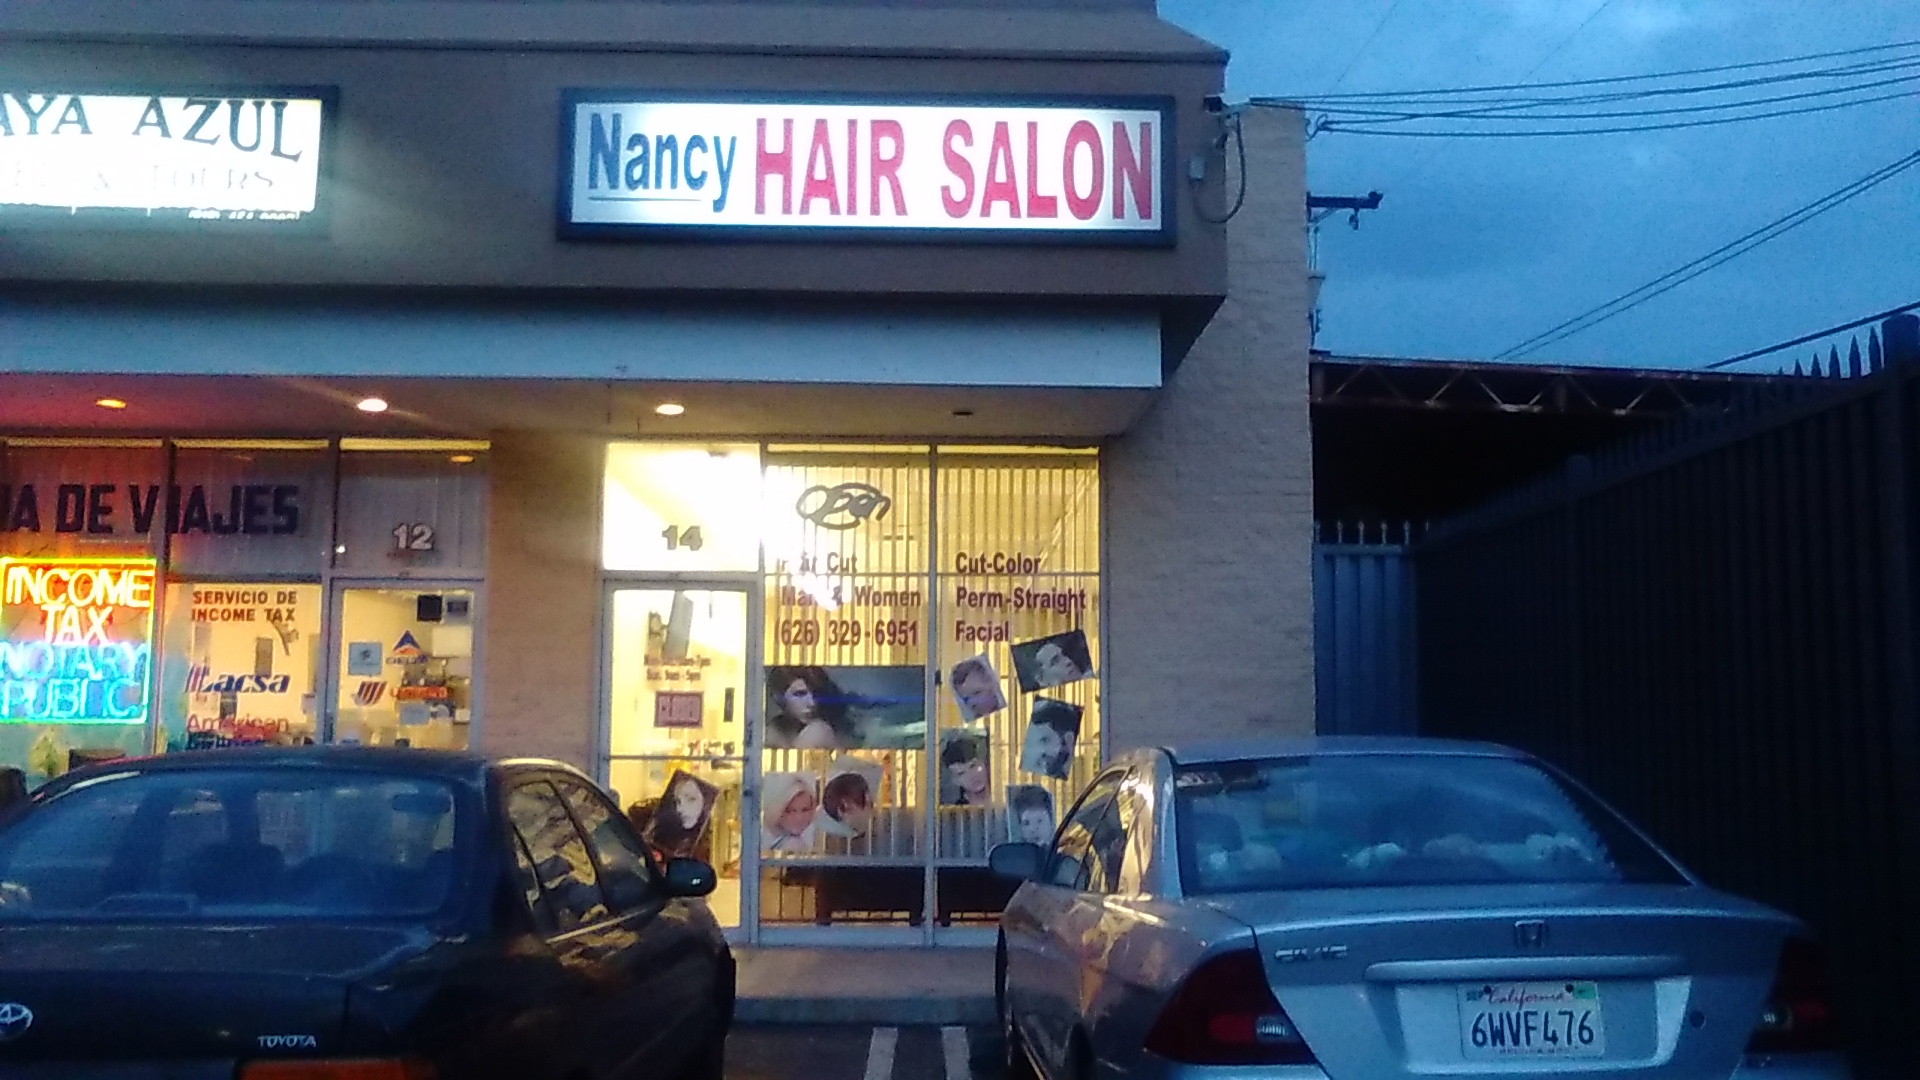 Nancy Hair Salon | Hair salon in El Monte, CA